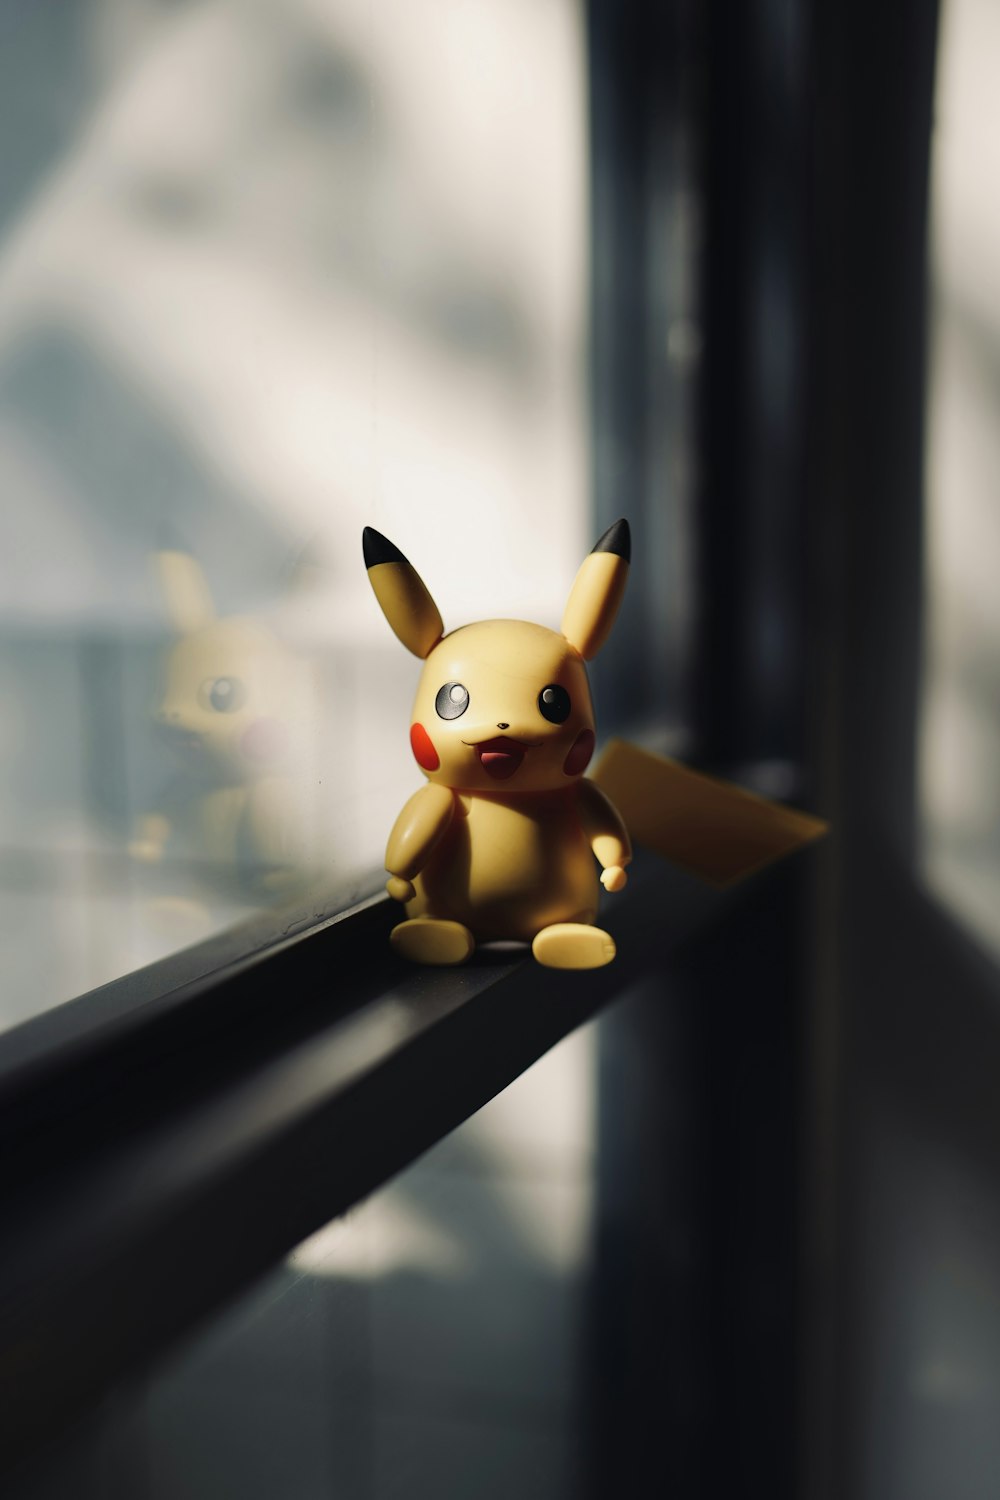 Premium AI Image  Anime Pikachu Pokemon wallpaper